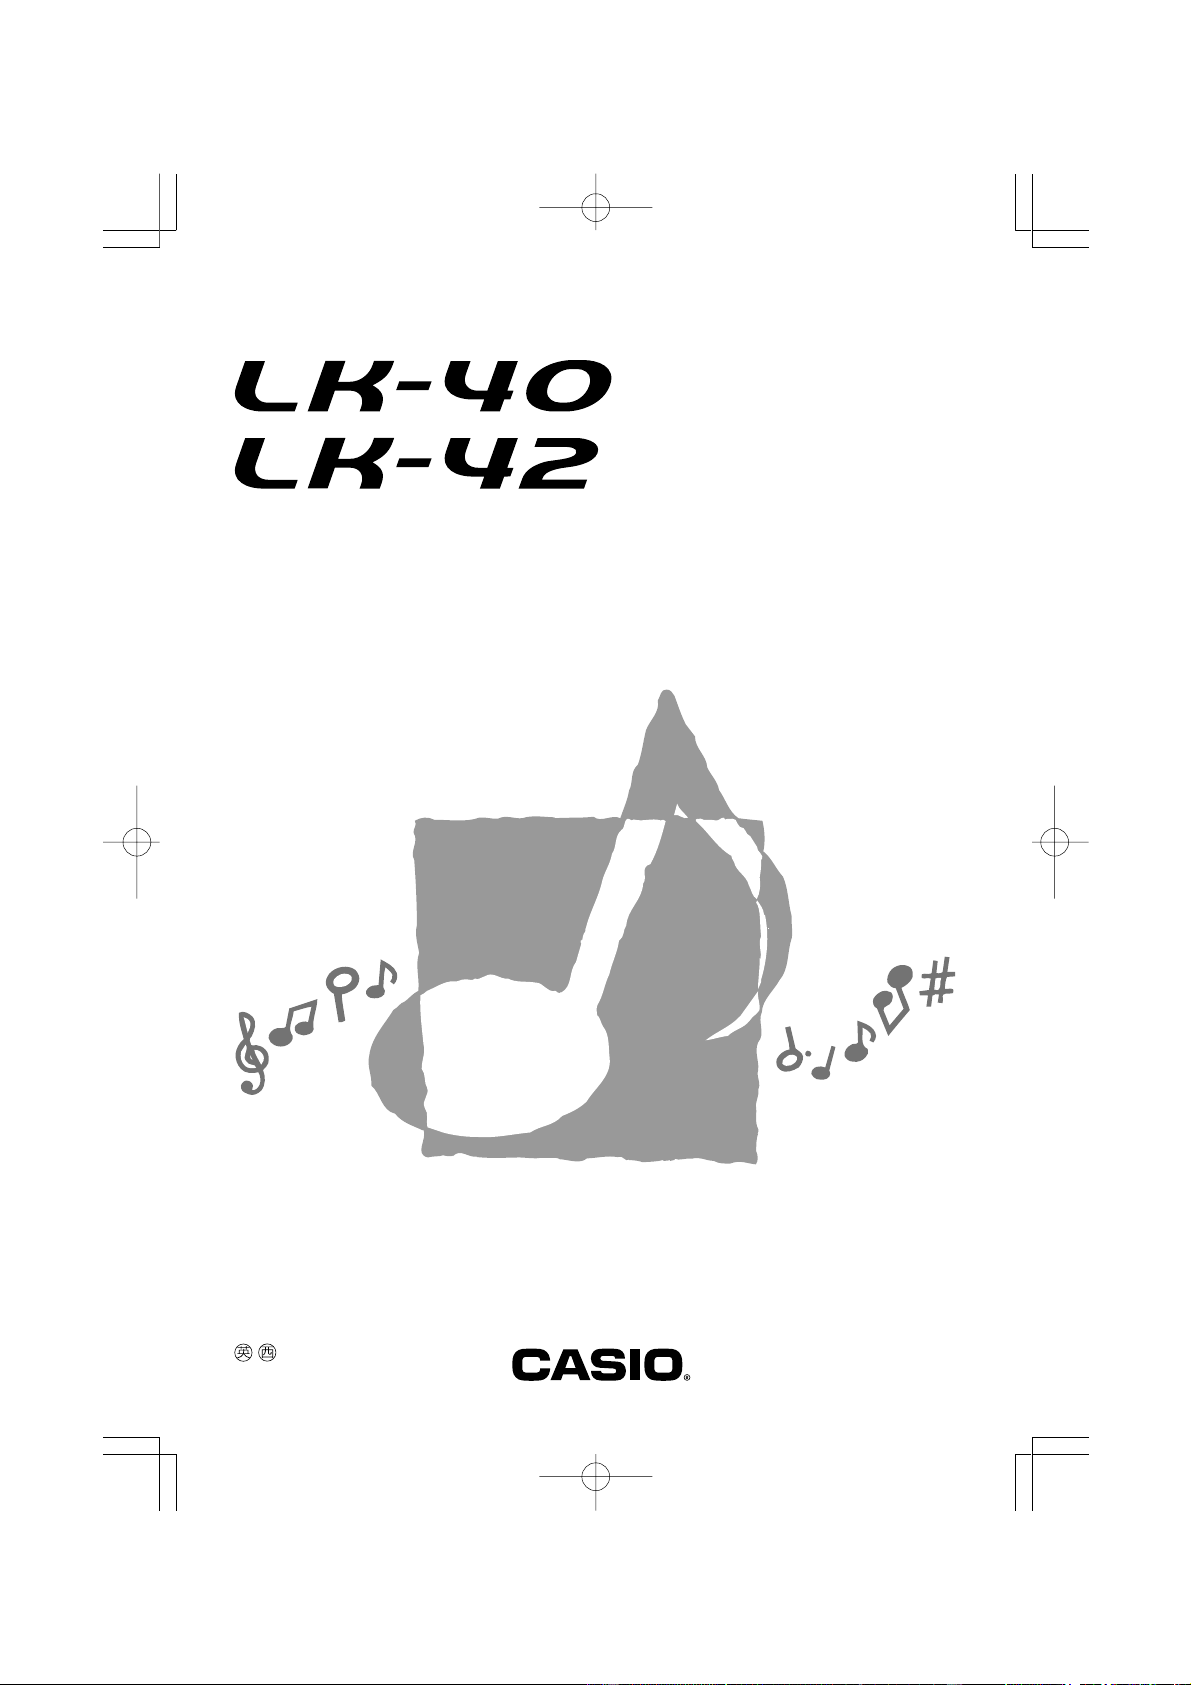 Manual Casio LK-42 (page 1 of 59) (English)